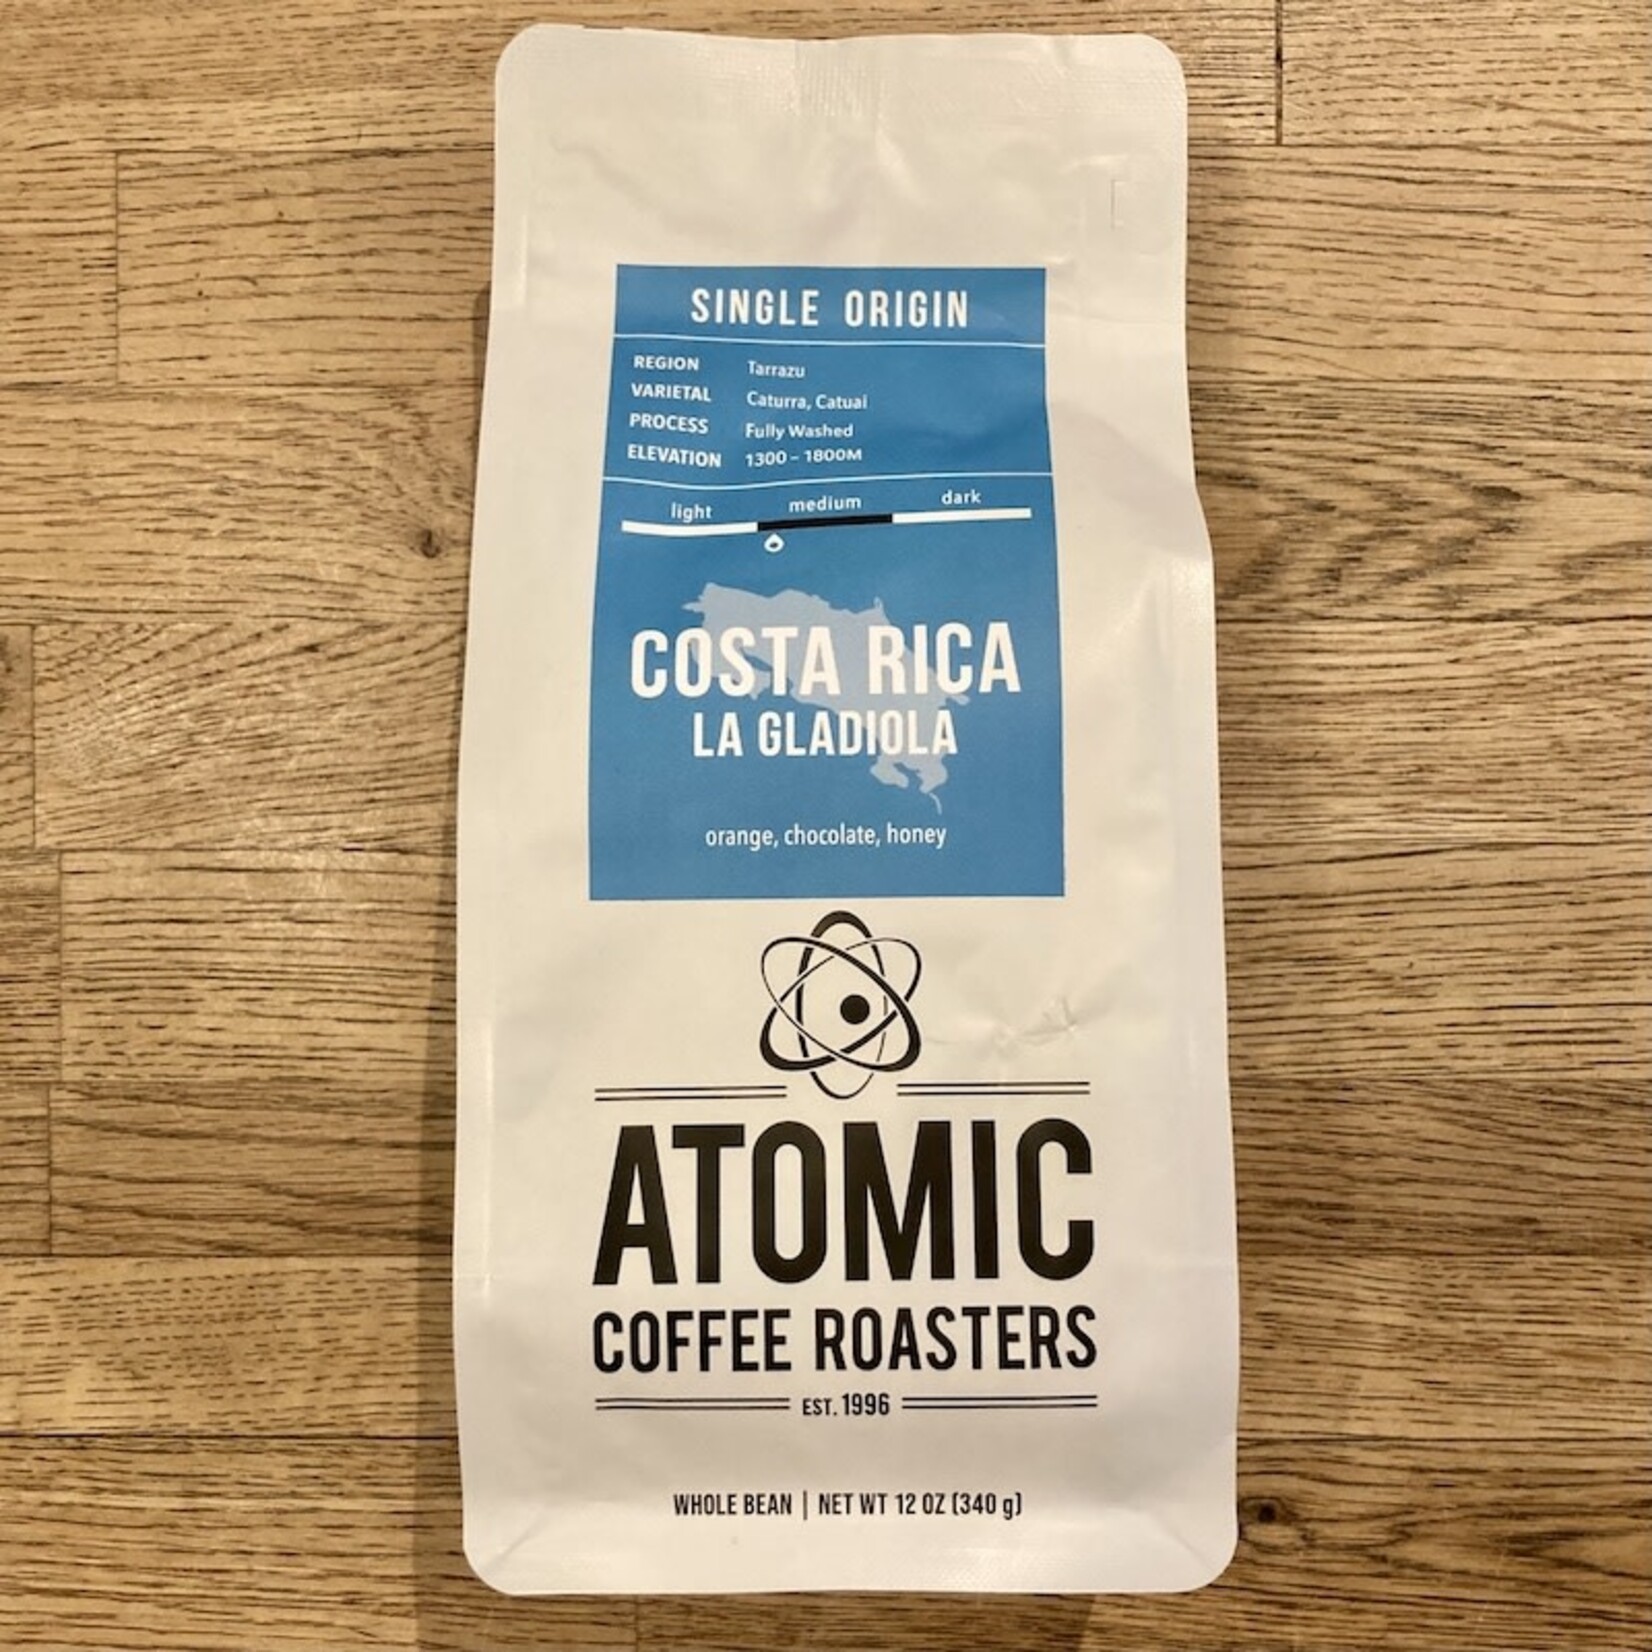 USA Atomic Coffee Roasters Single Origin Costa Rica "La Gladiola"